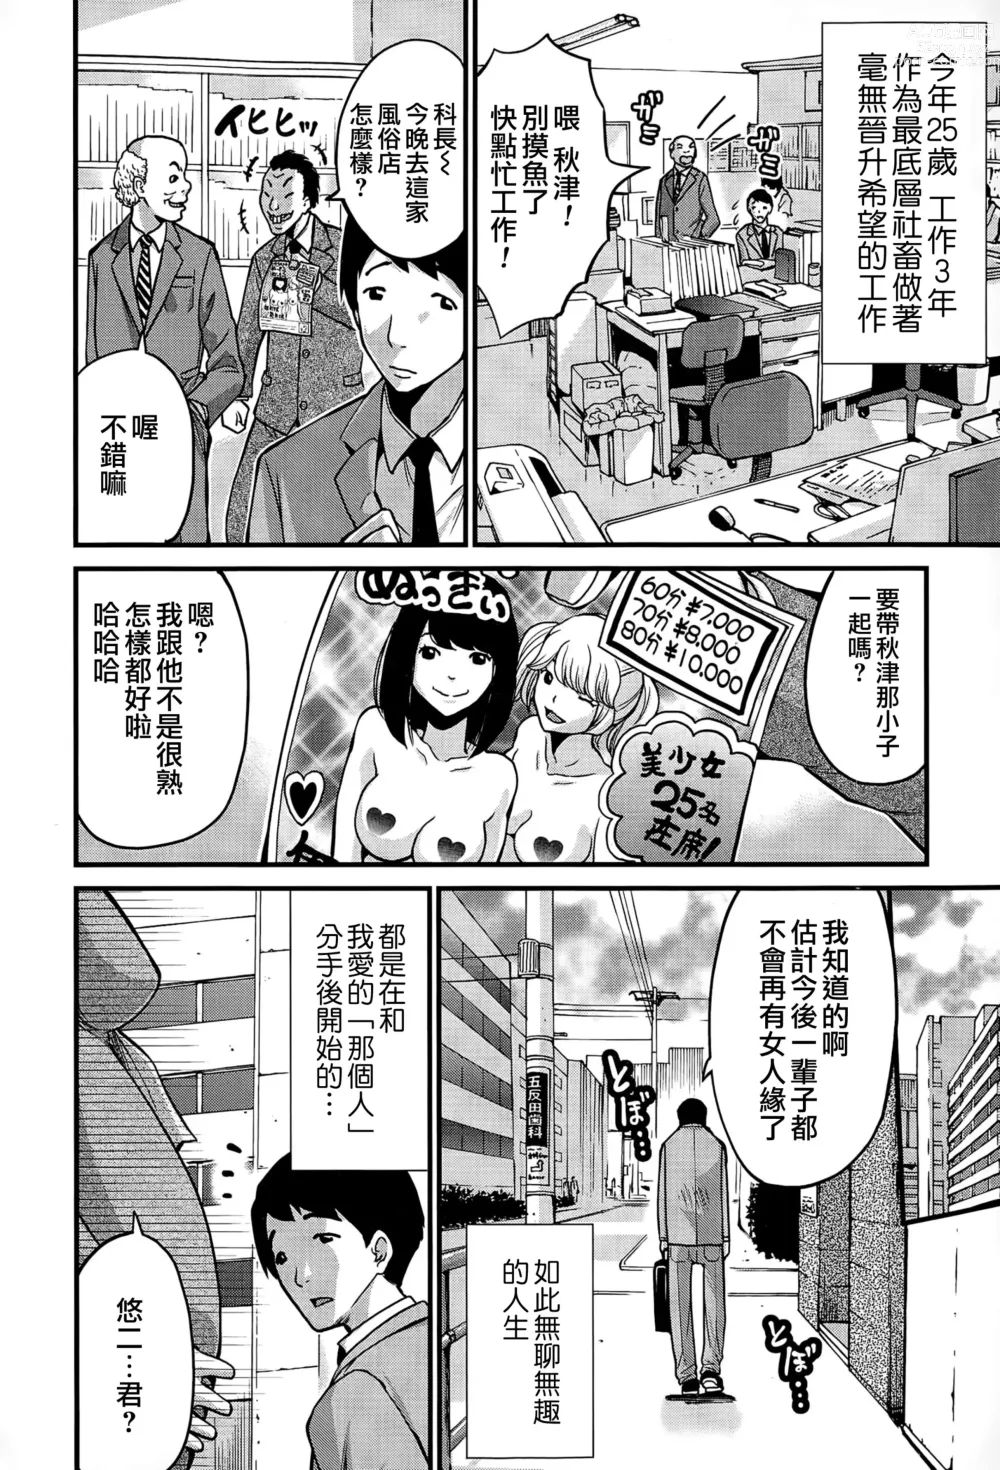 Page 2 of manga 初恋怀胎十个月 Ch. 1-2